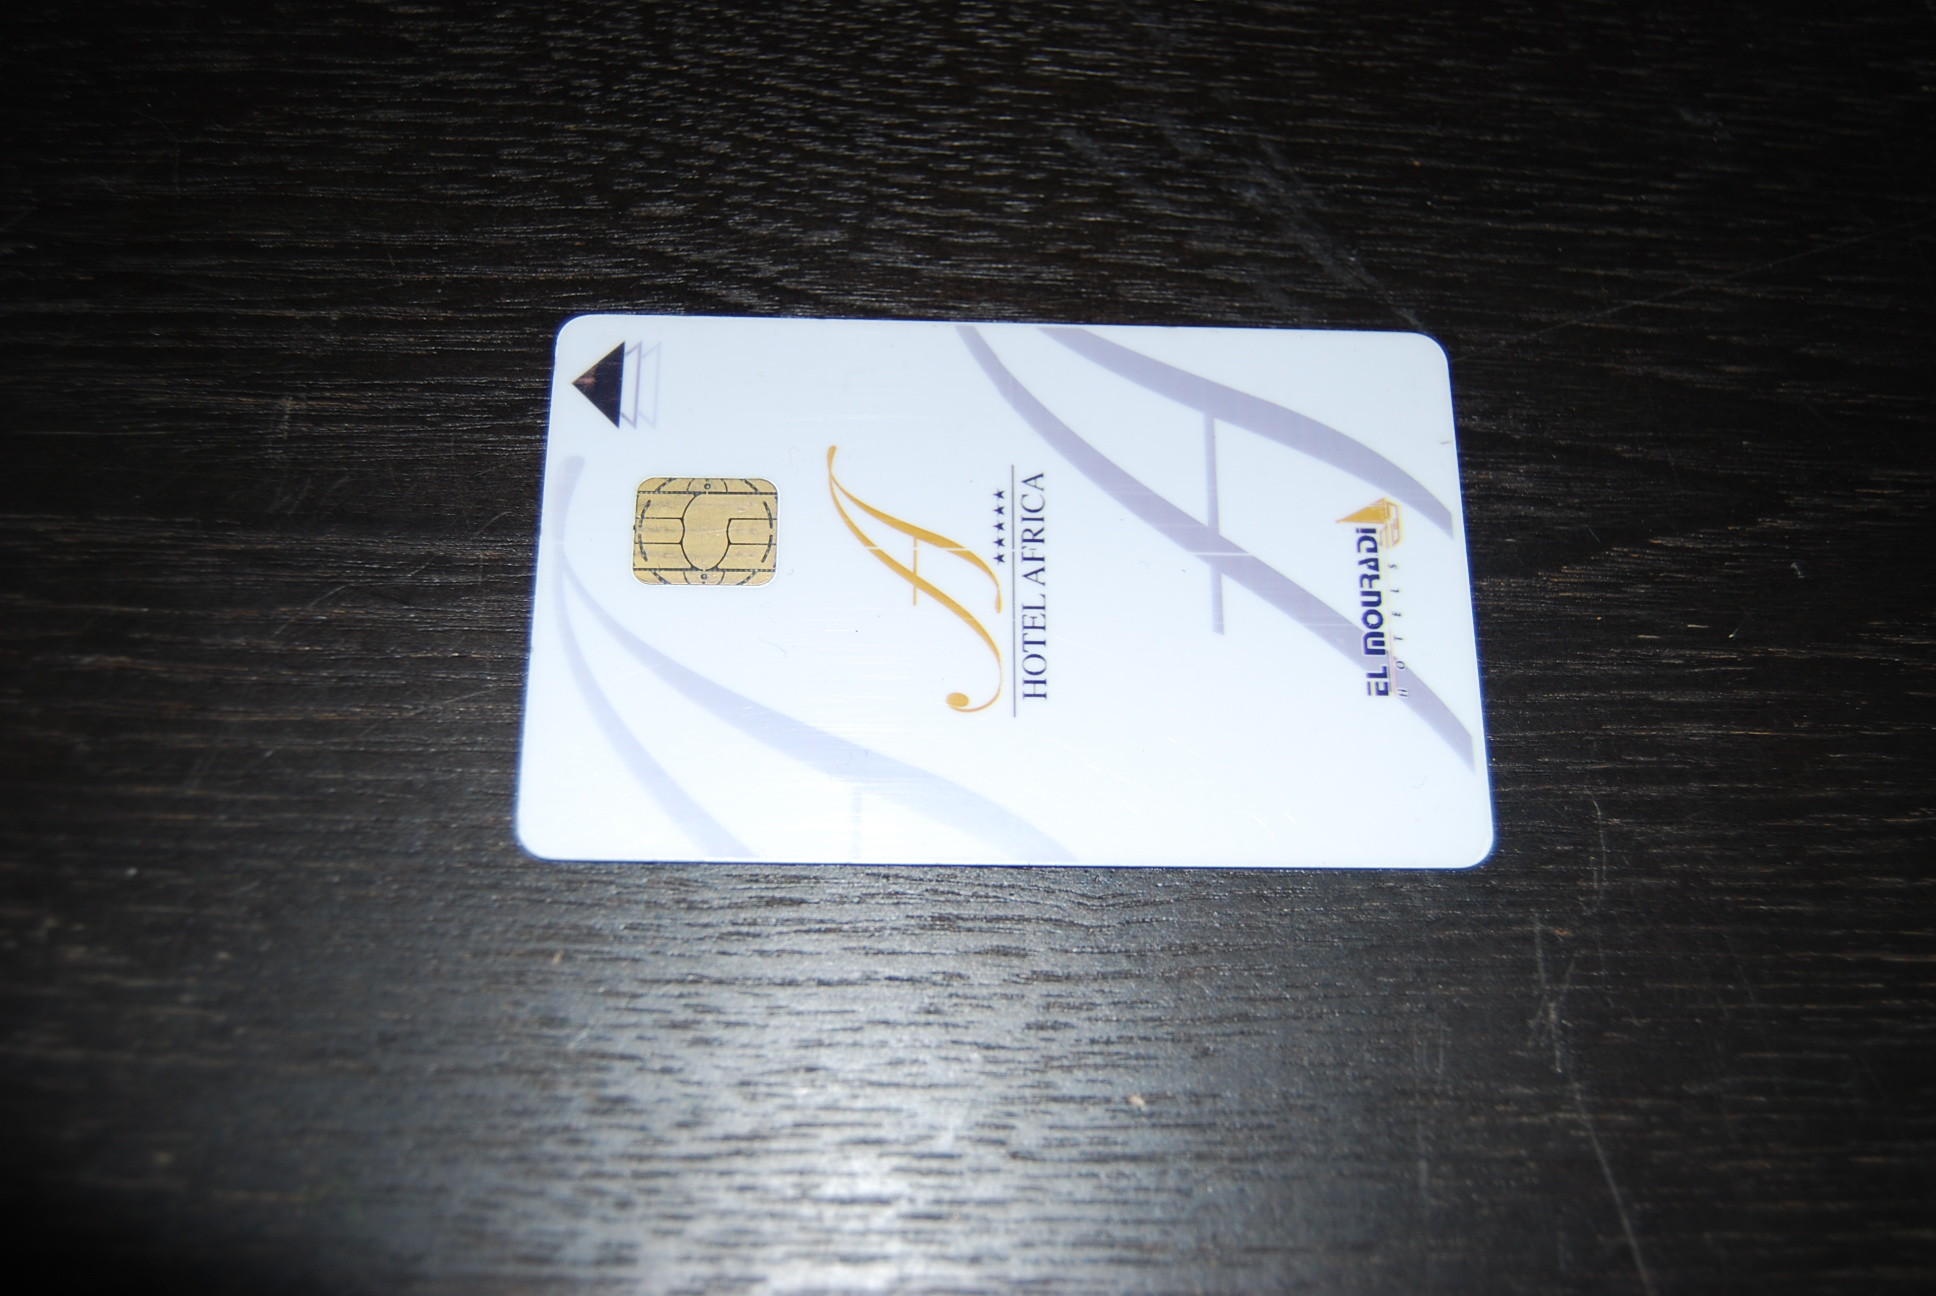 A hotel key card | Source: Flickr